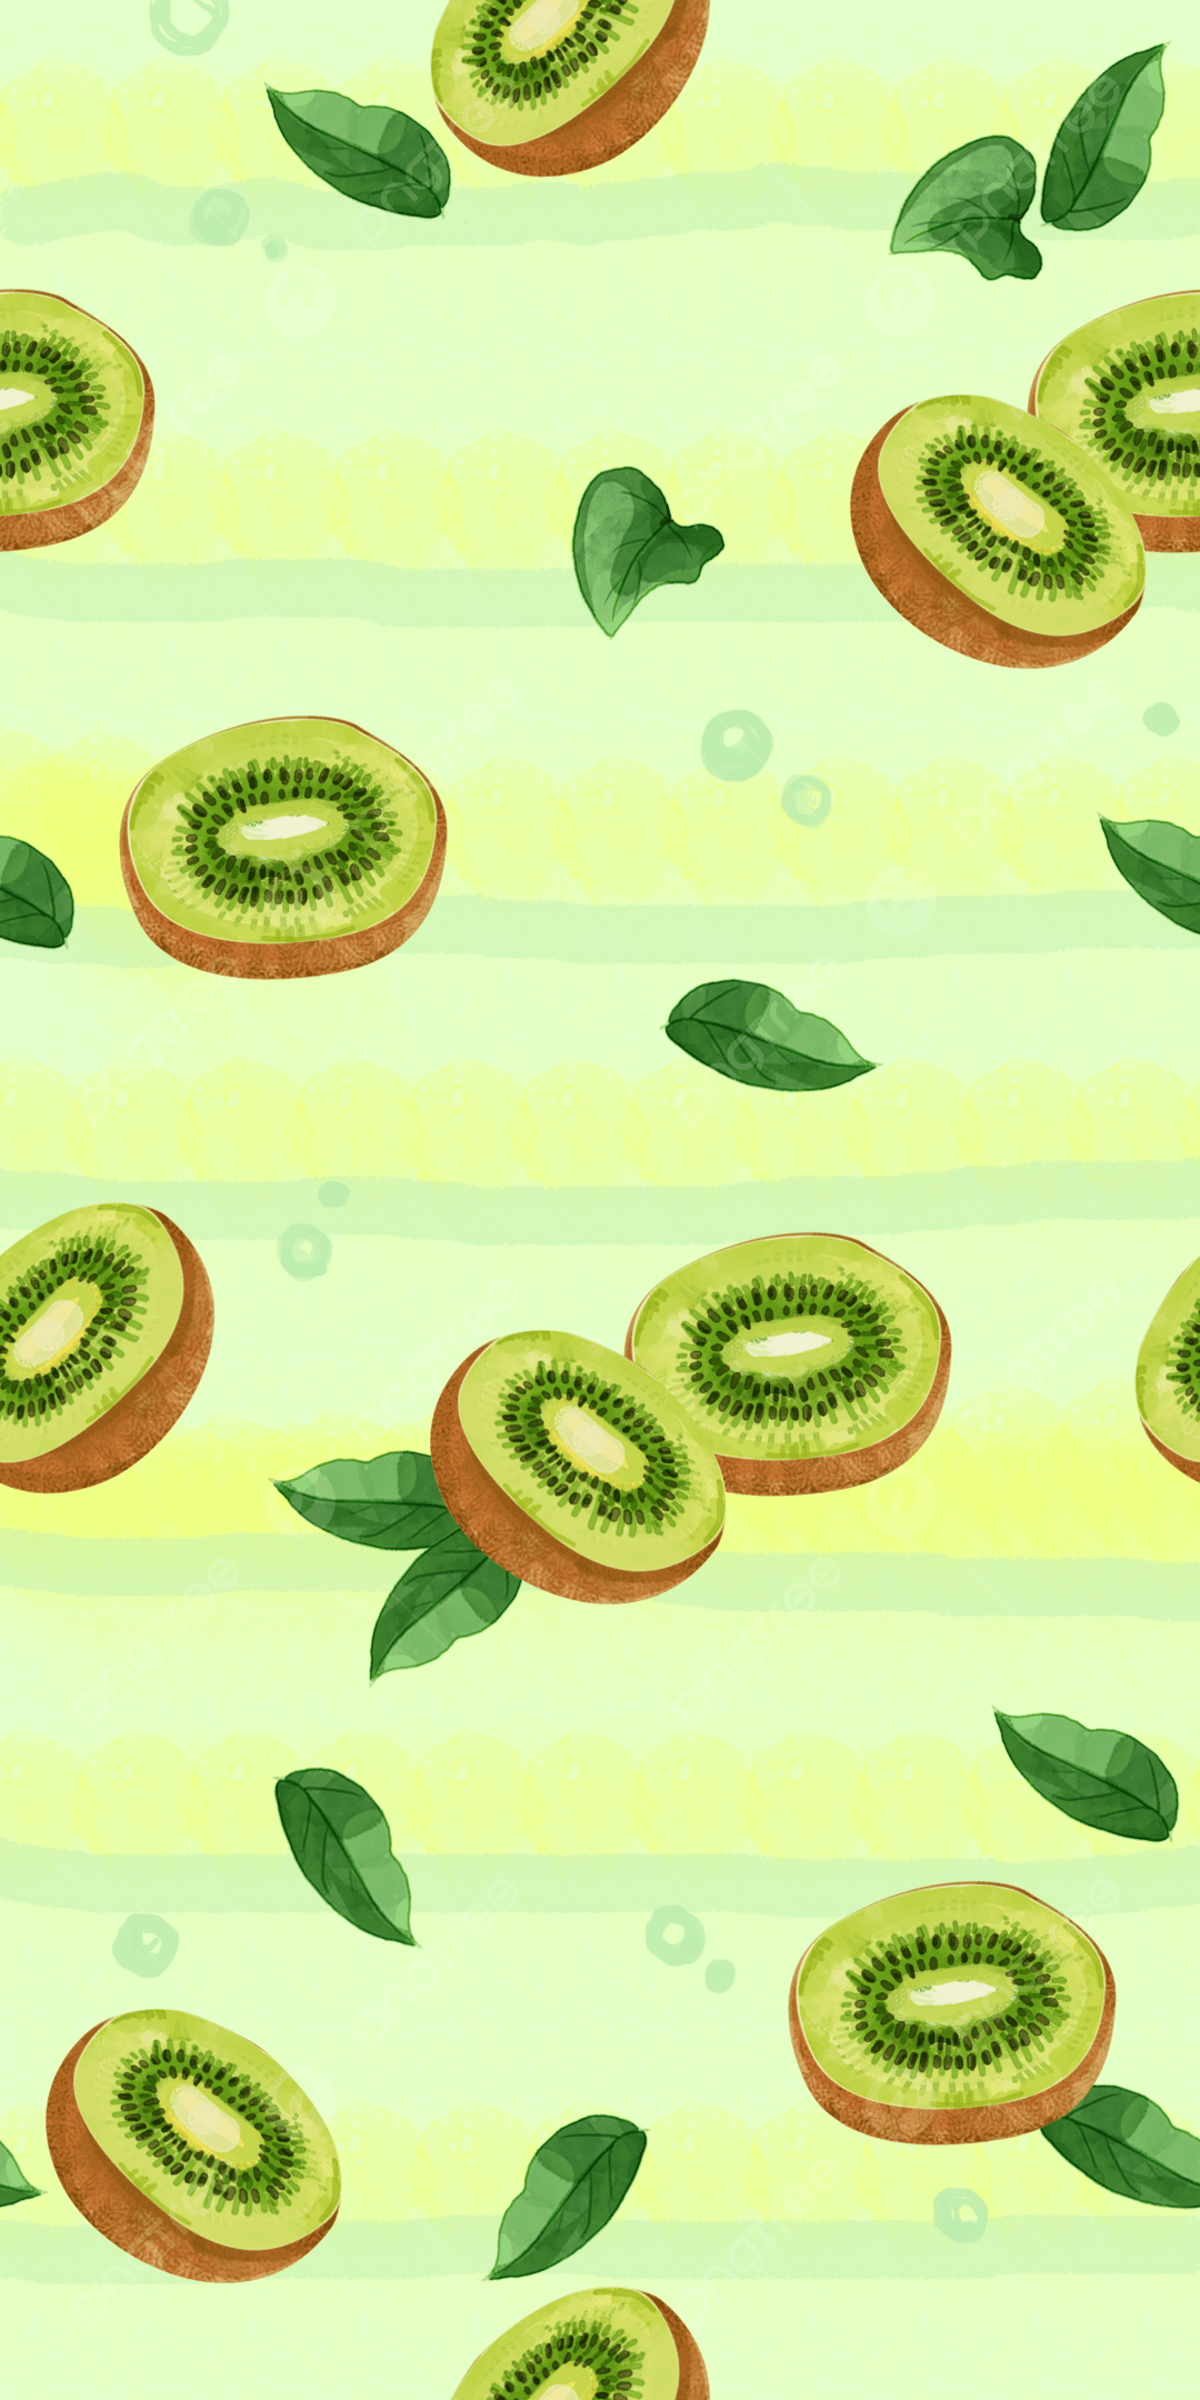 Fruit Kiwi Seamless Background Wallpaper Image For Free Download